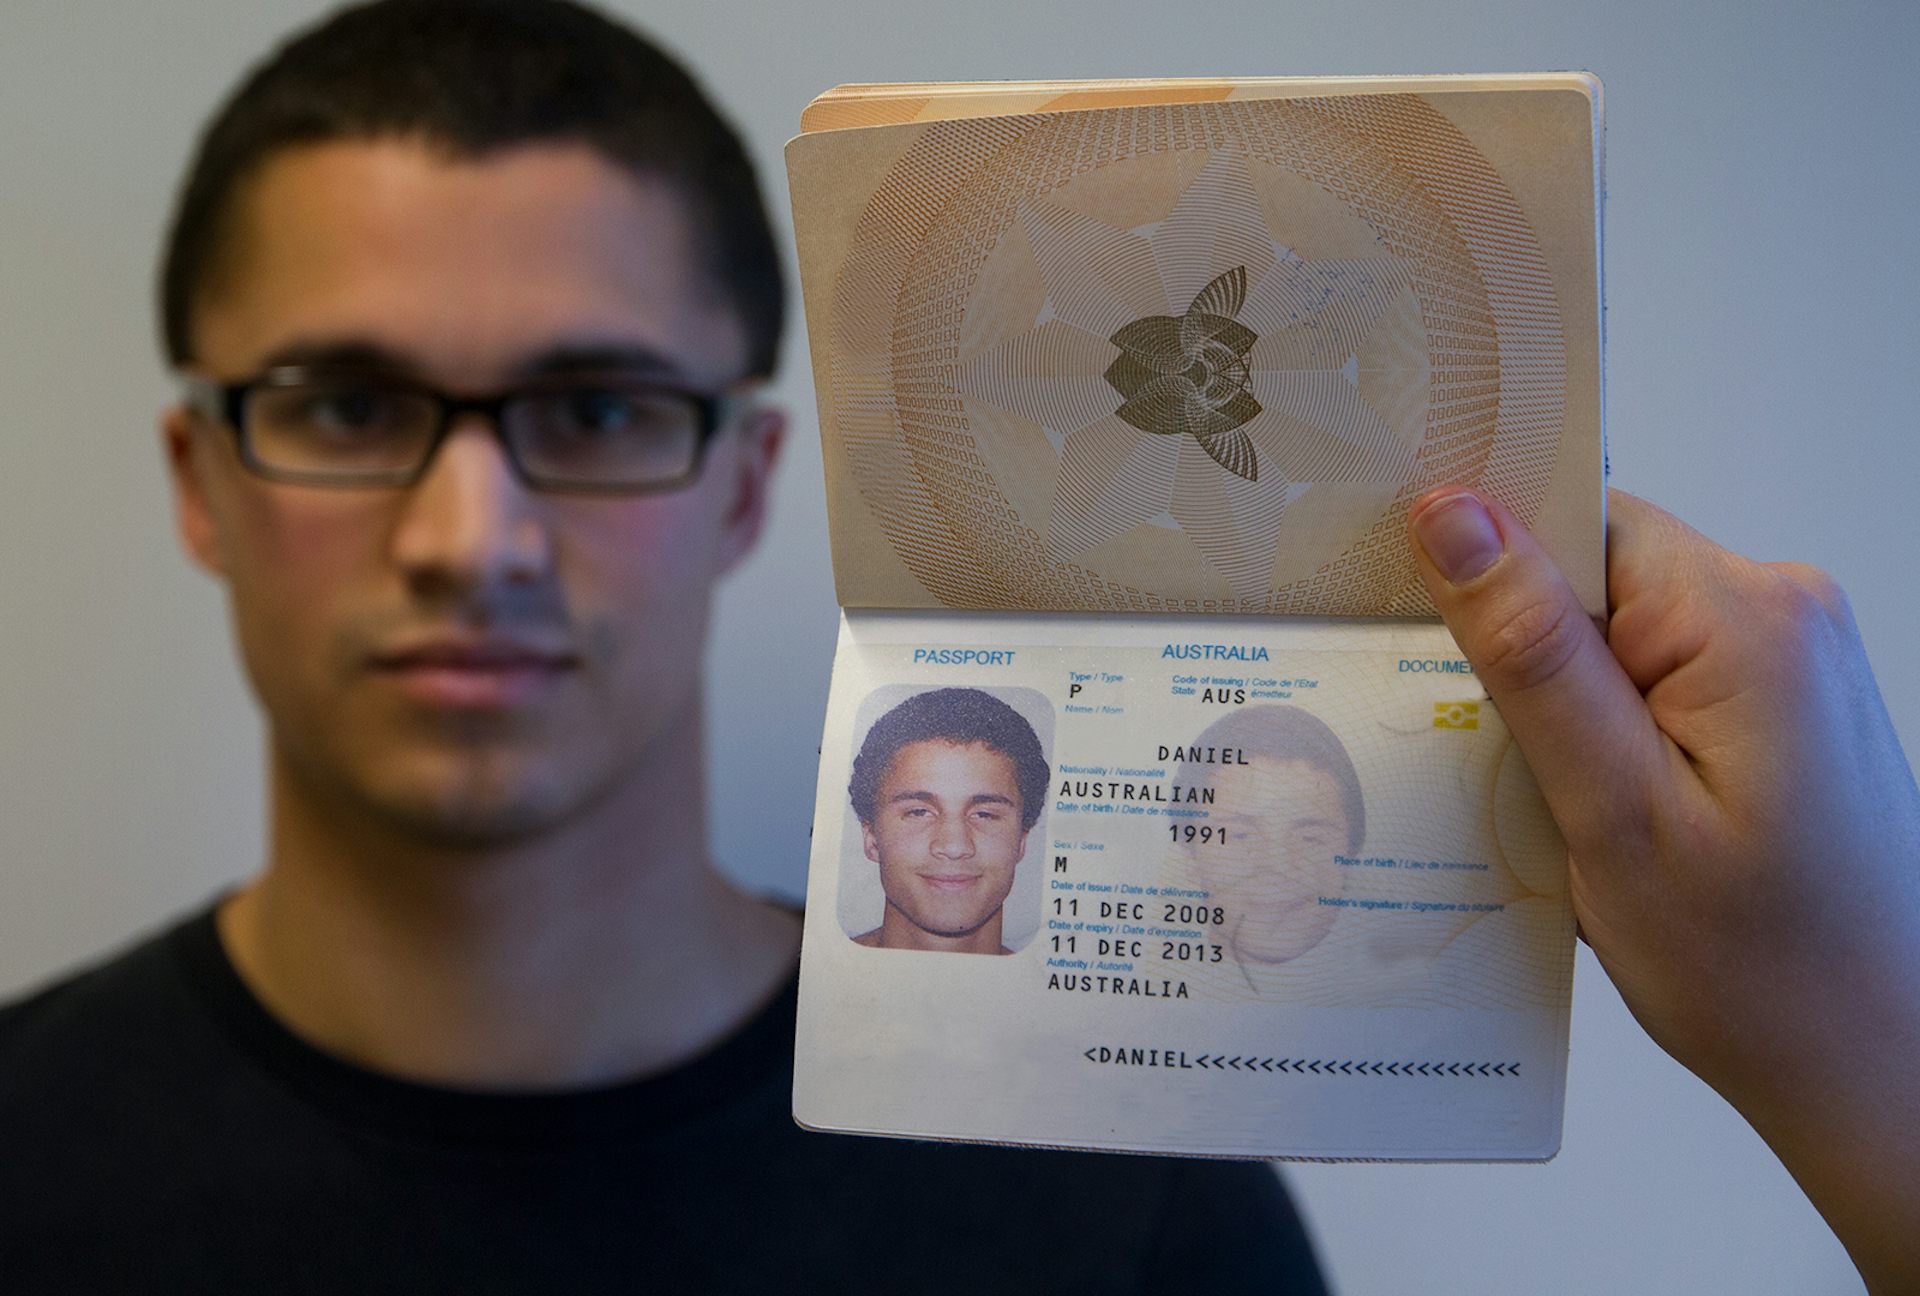 Passport staff miss one in seven fake ID checks